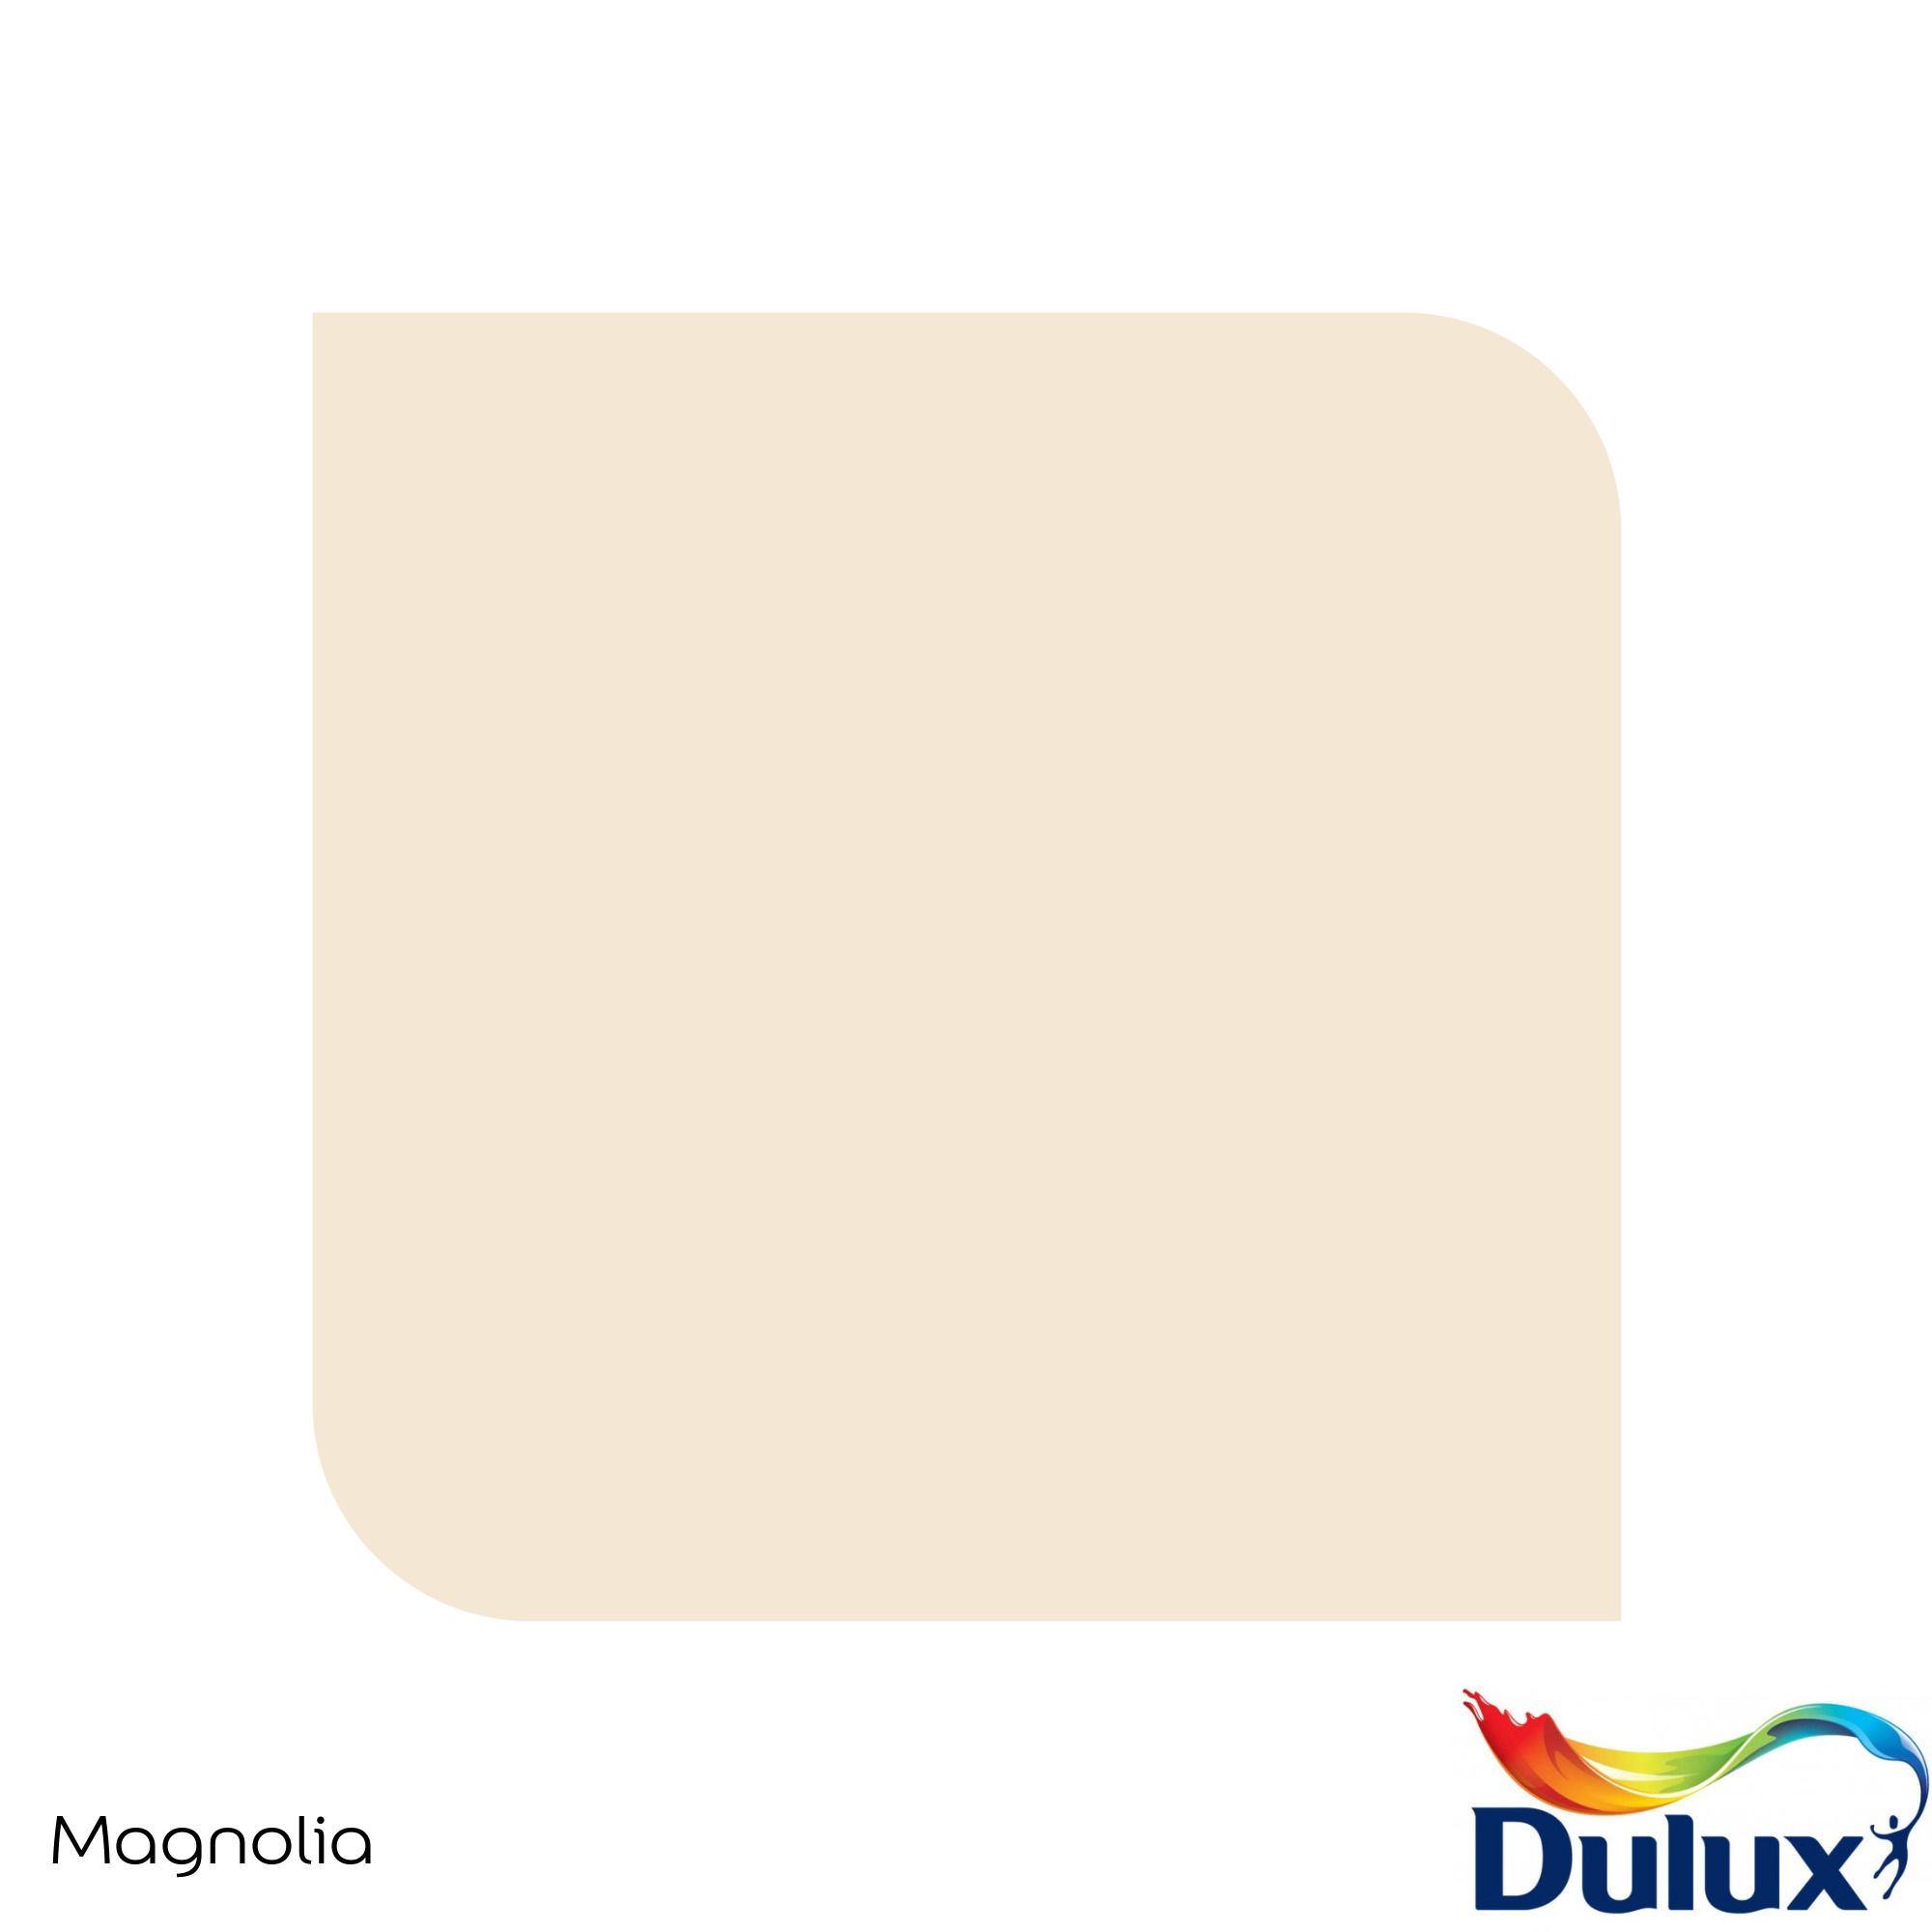 Dulux Standard Magnolia Matt Emulsion paint, 30ml